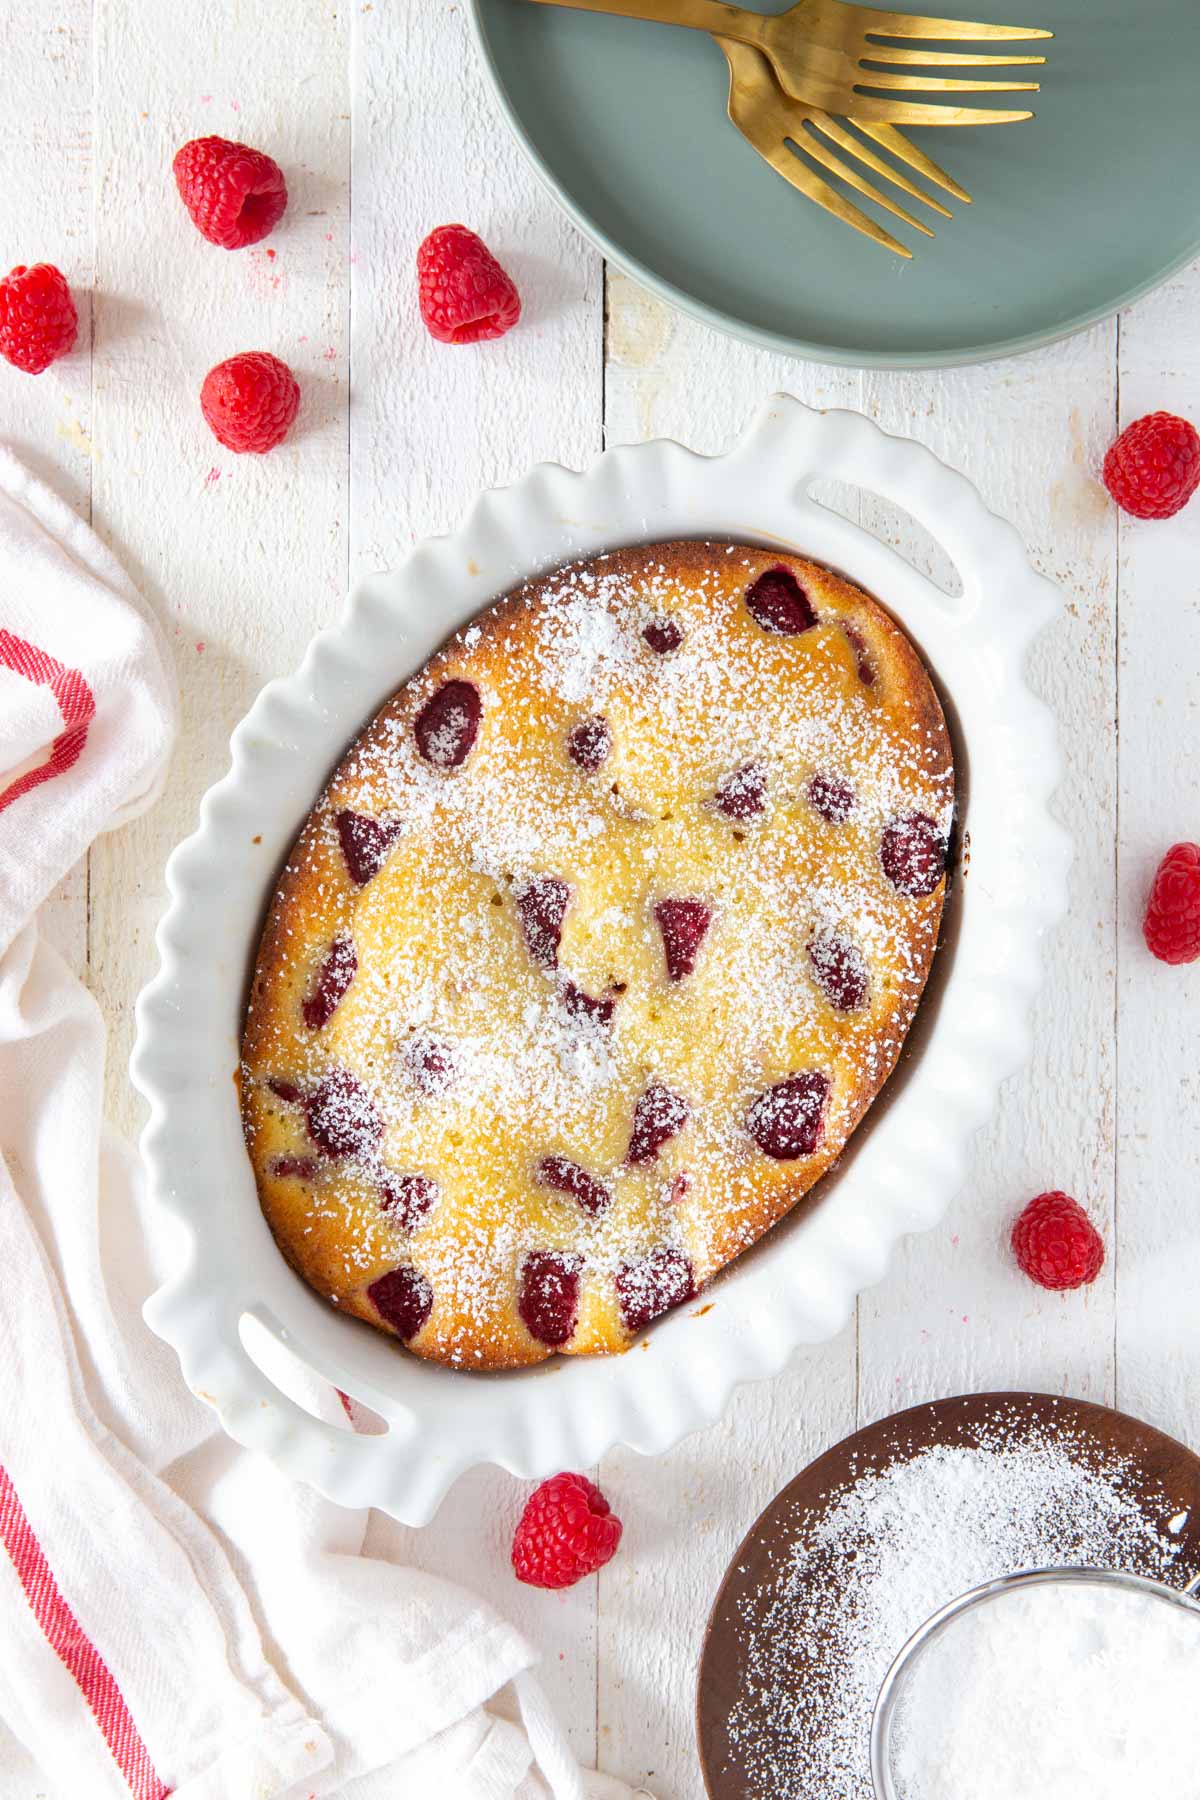 lemon raspberry buckle cake in a white baking dish